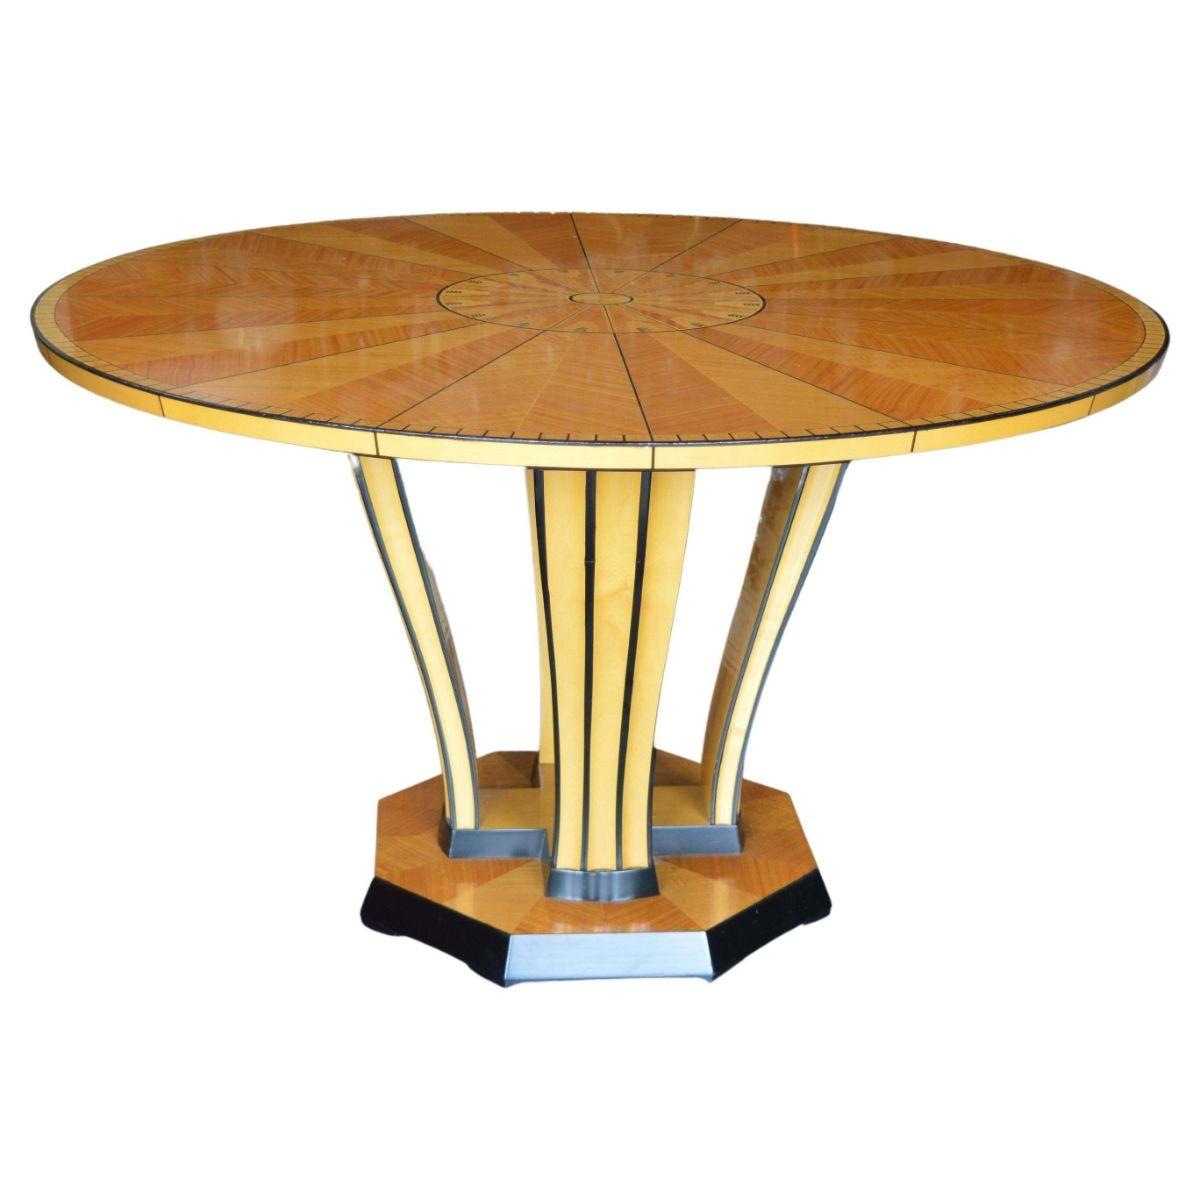 Italian Art Deco Inlaid Satinwood and Ebonized Table.